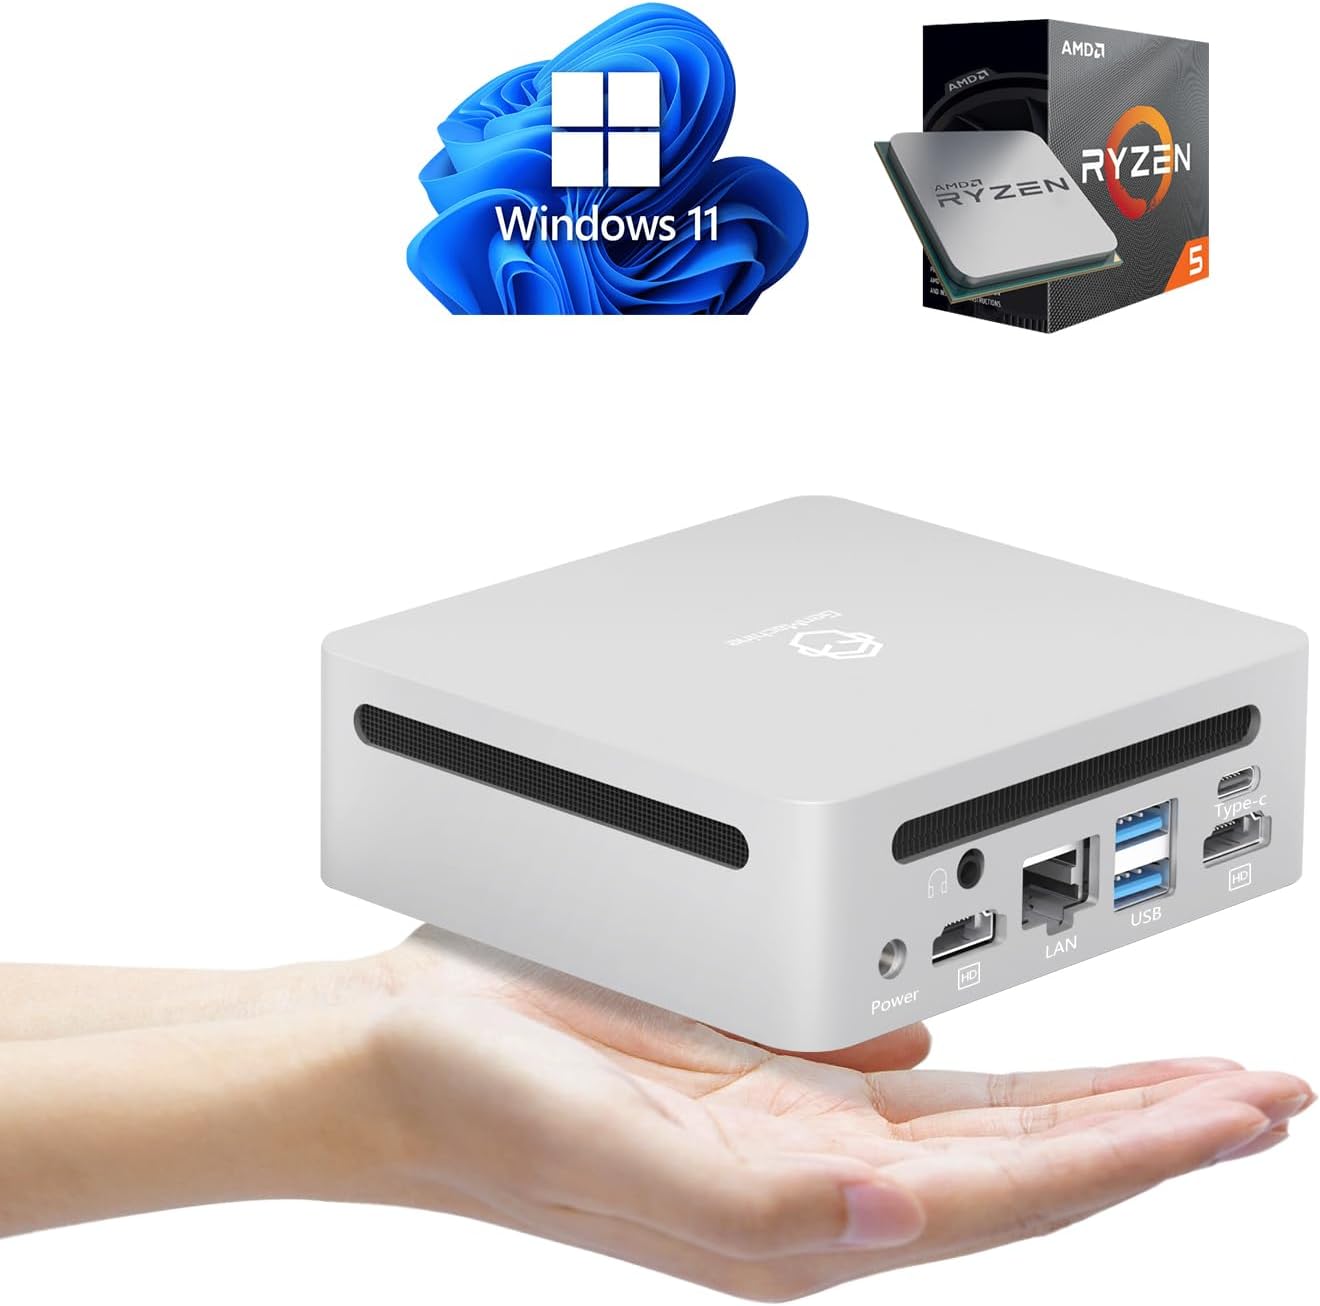 Mini PC Windows 11, HTPC, Media Server, Small Desktop Computer, AMD Ryzen 5 4500U up to 4.0 GHz, 16GB DDR4, 512GB SATA  M.2 NVMe for Office, Home, Design, Game use